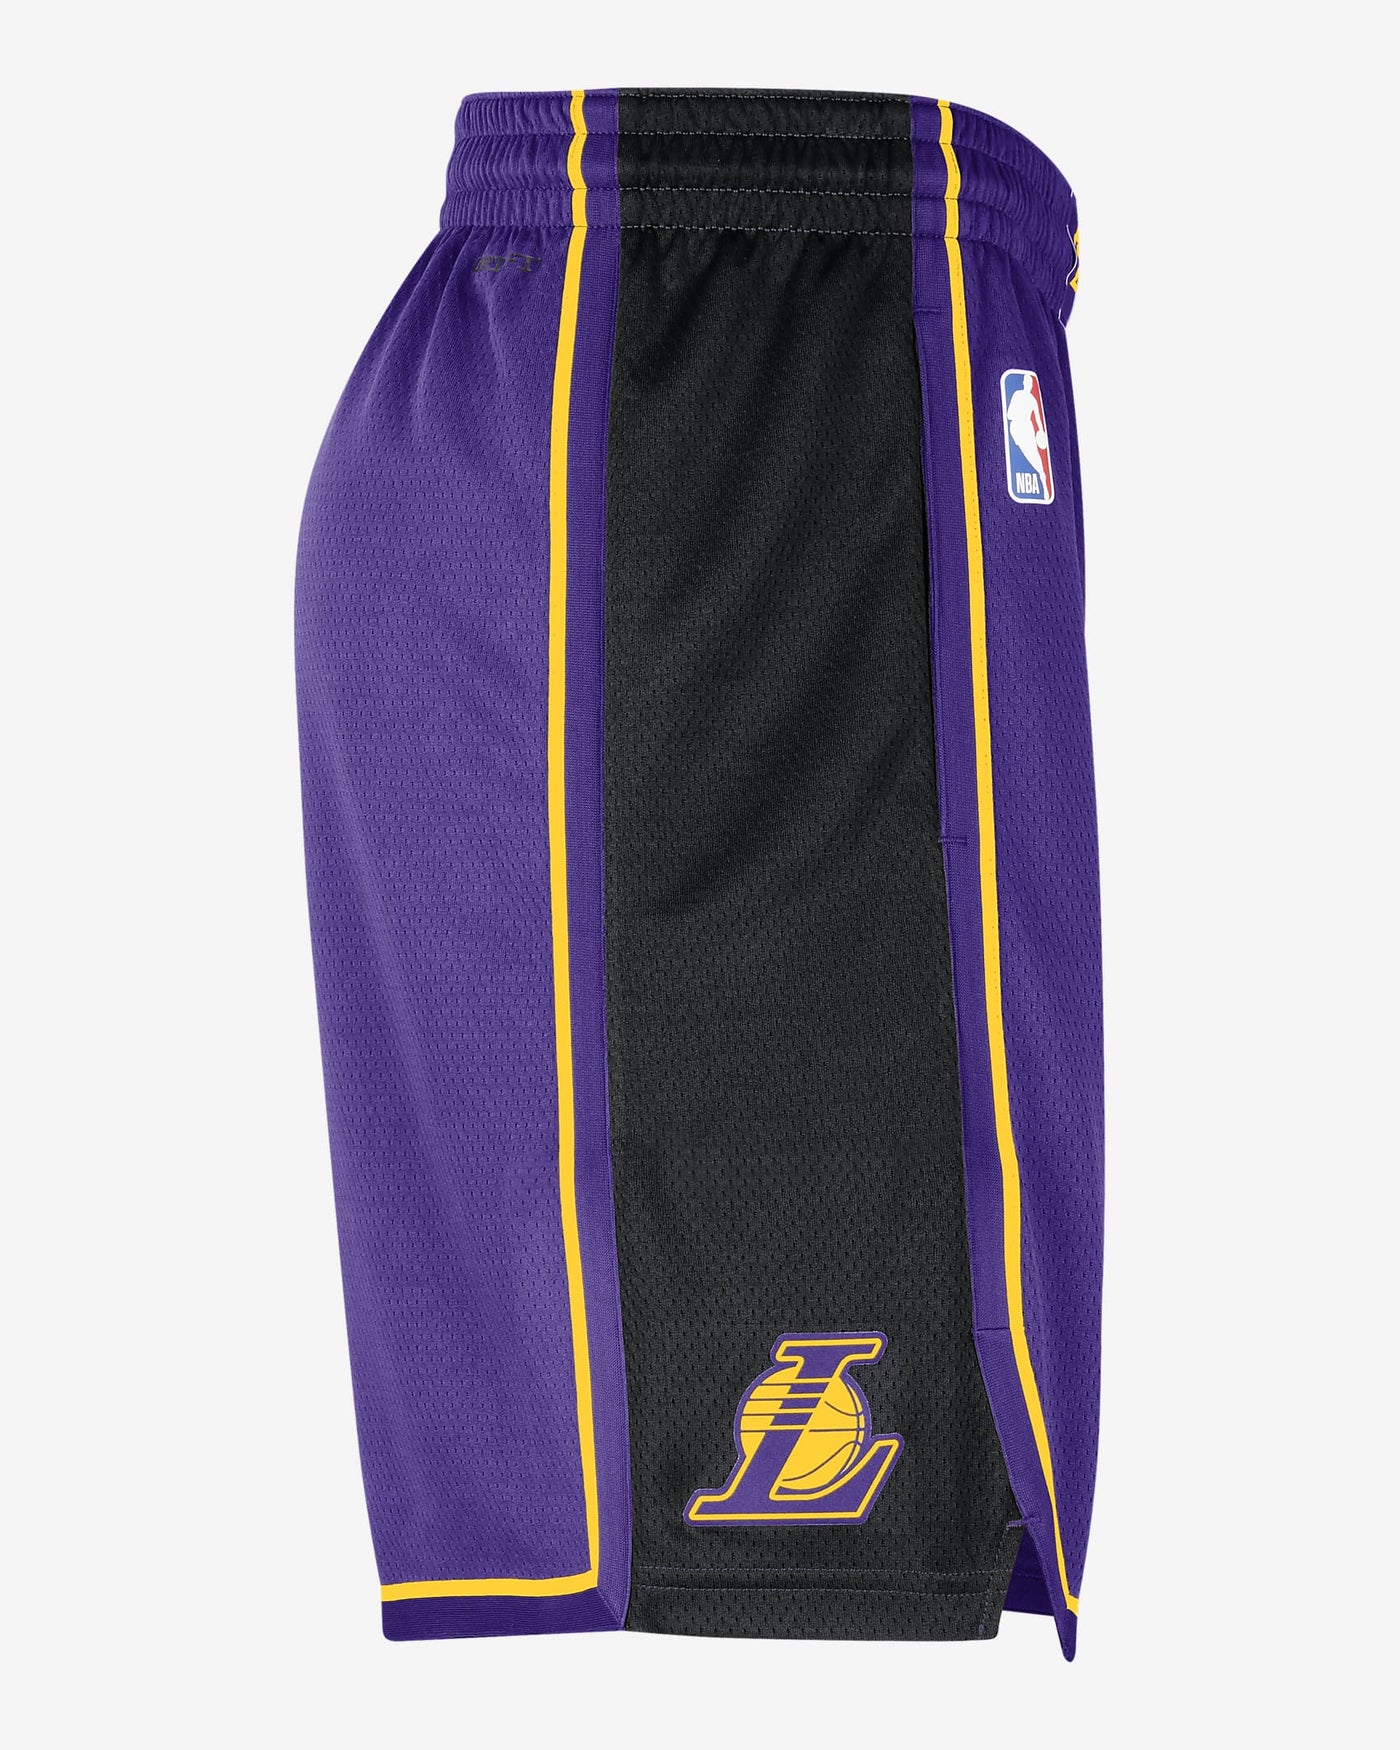 Pantaloncini Viola dei Los Angeles Lakers